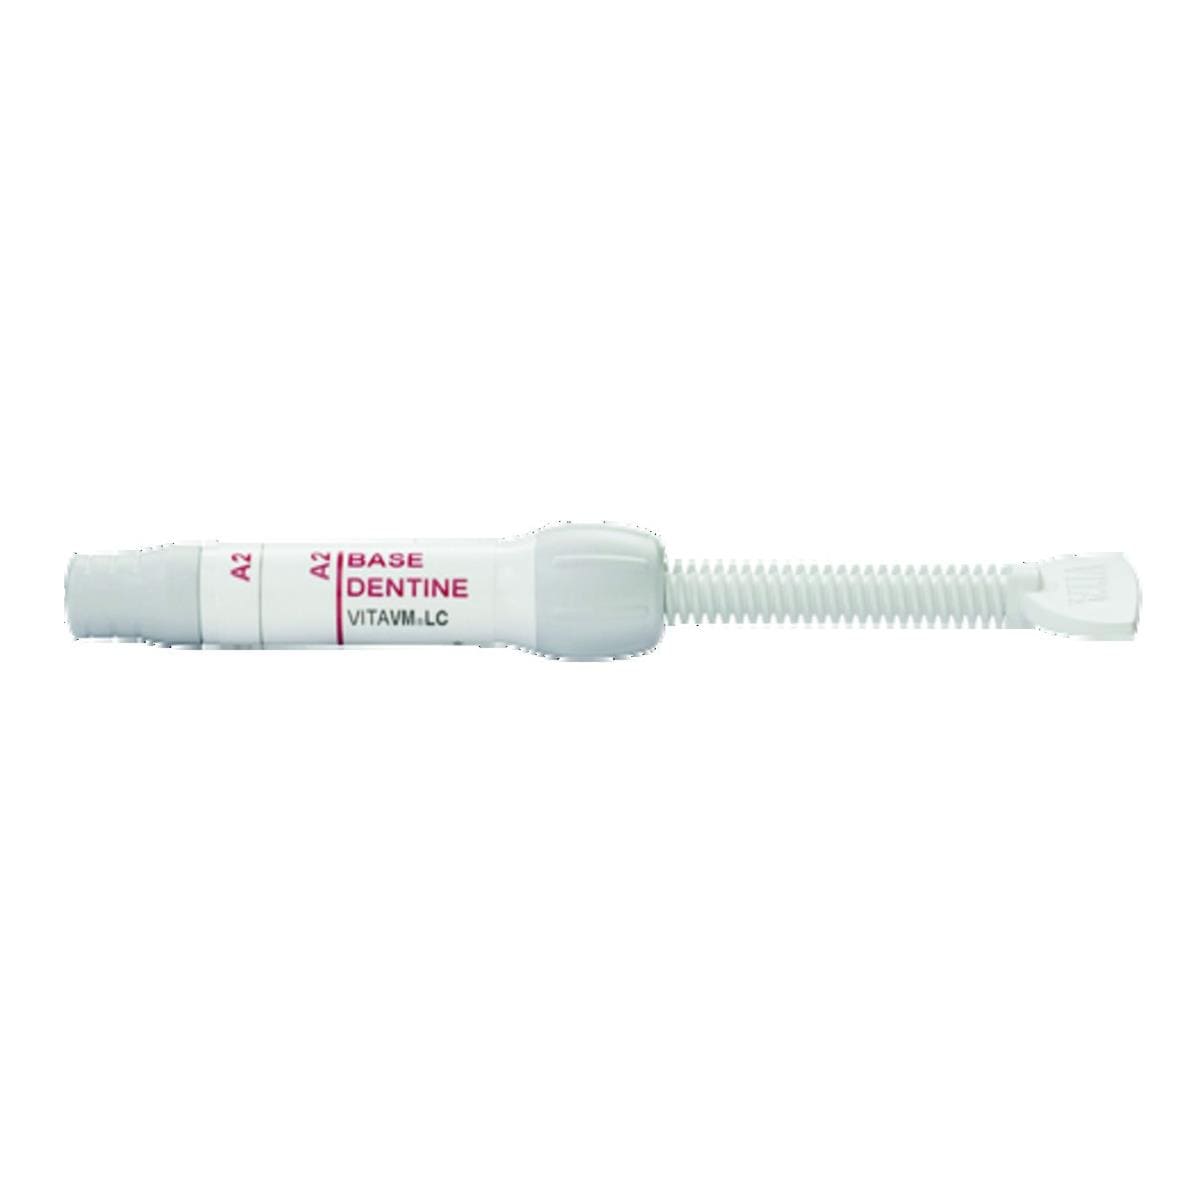 VM LC VITA - 3-D Master - Base Dentine 2L1,5 - La seringue de 4 g